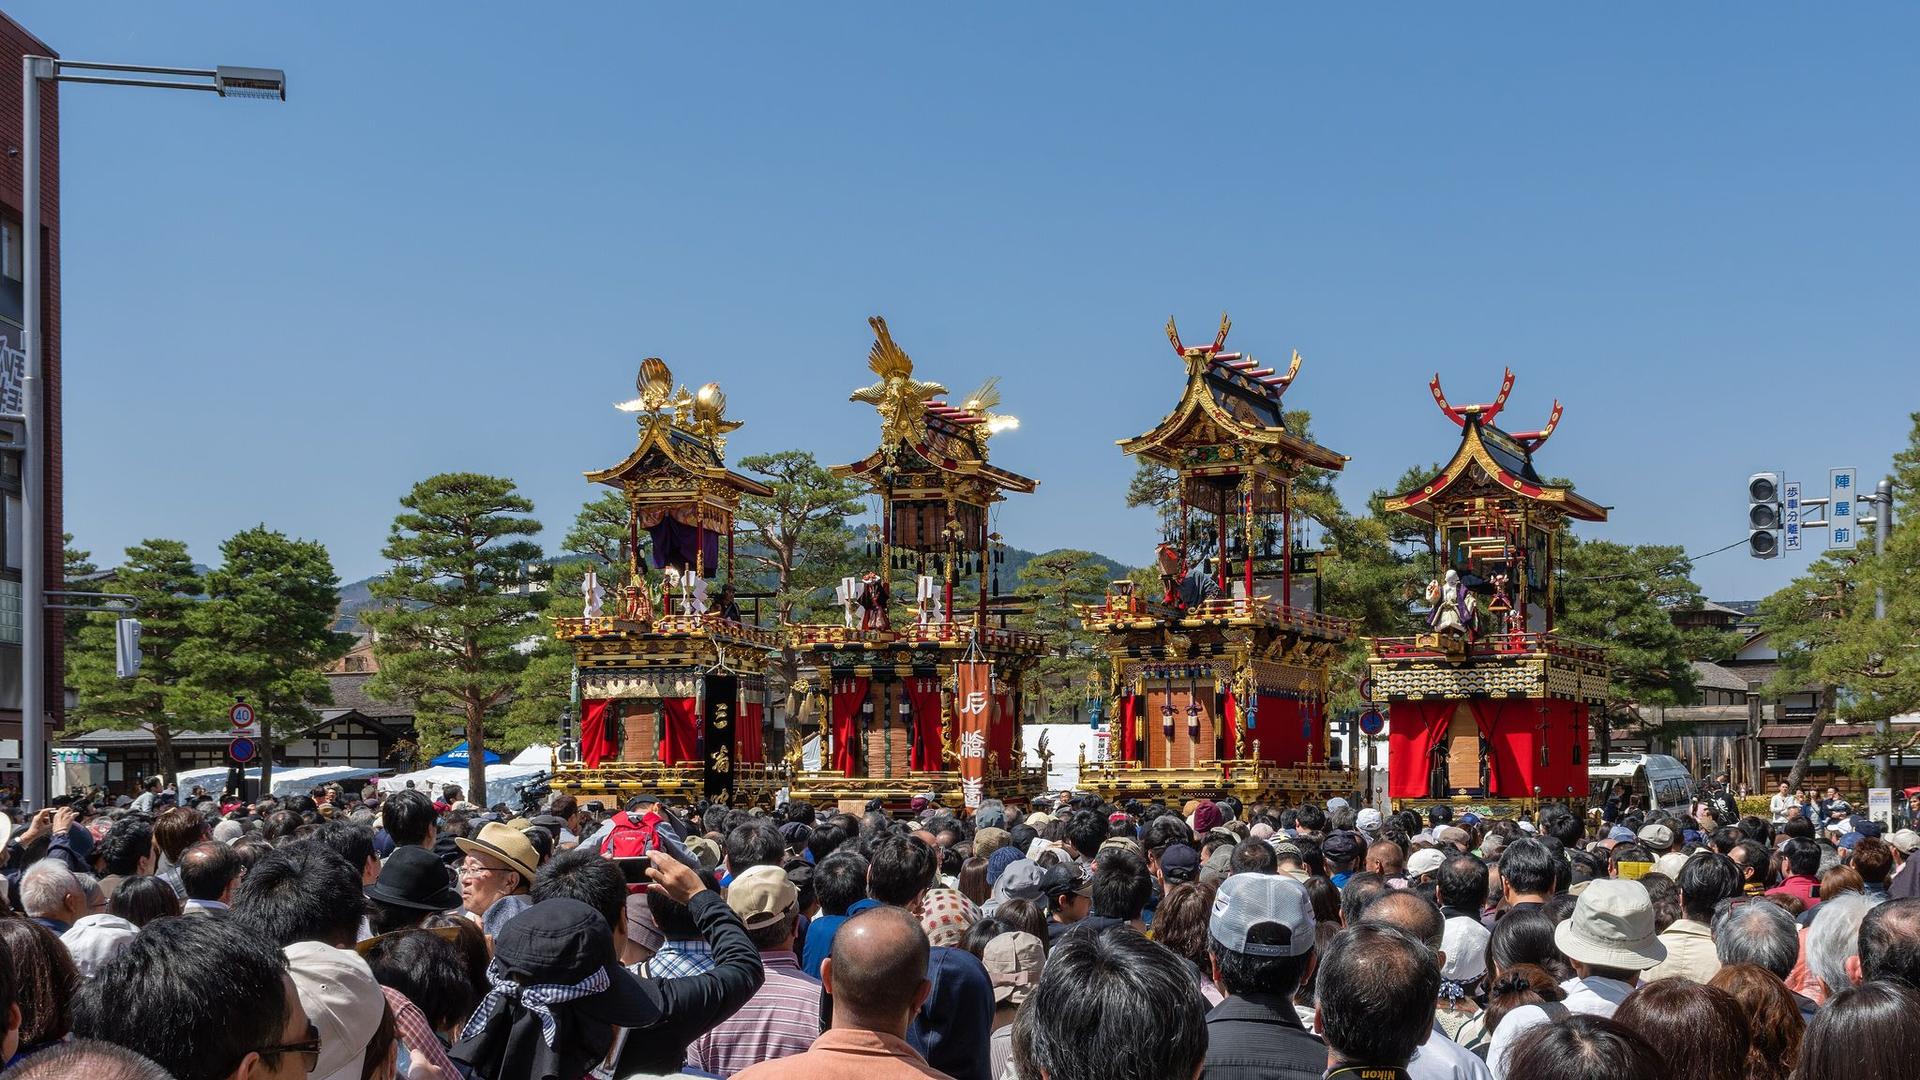 The Spring Takayama Festival